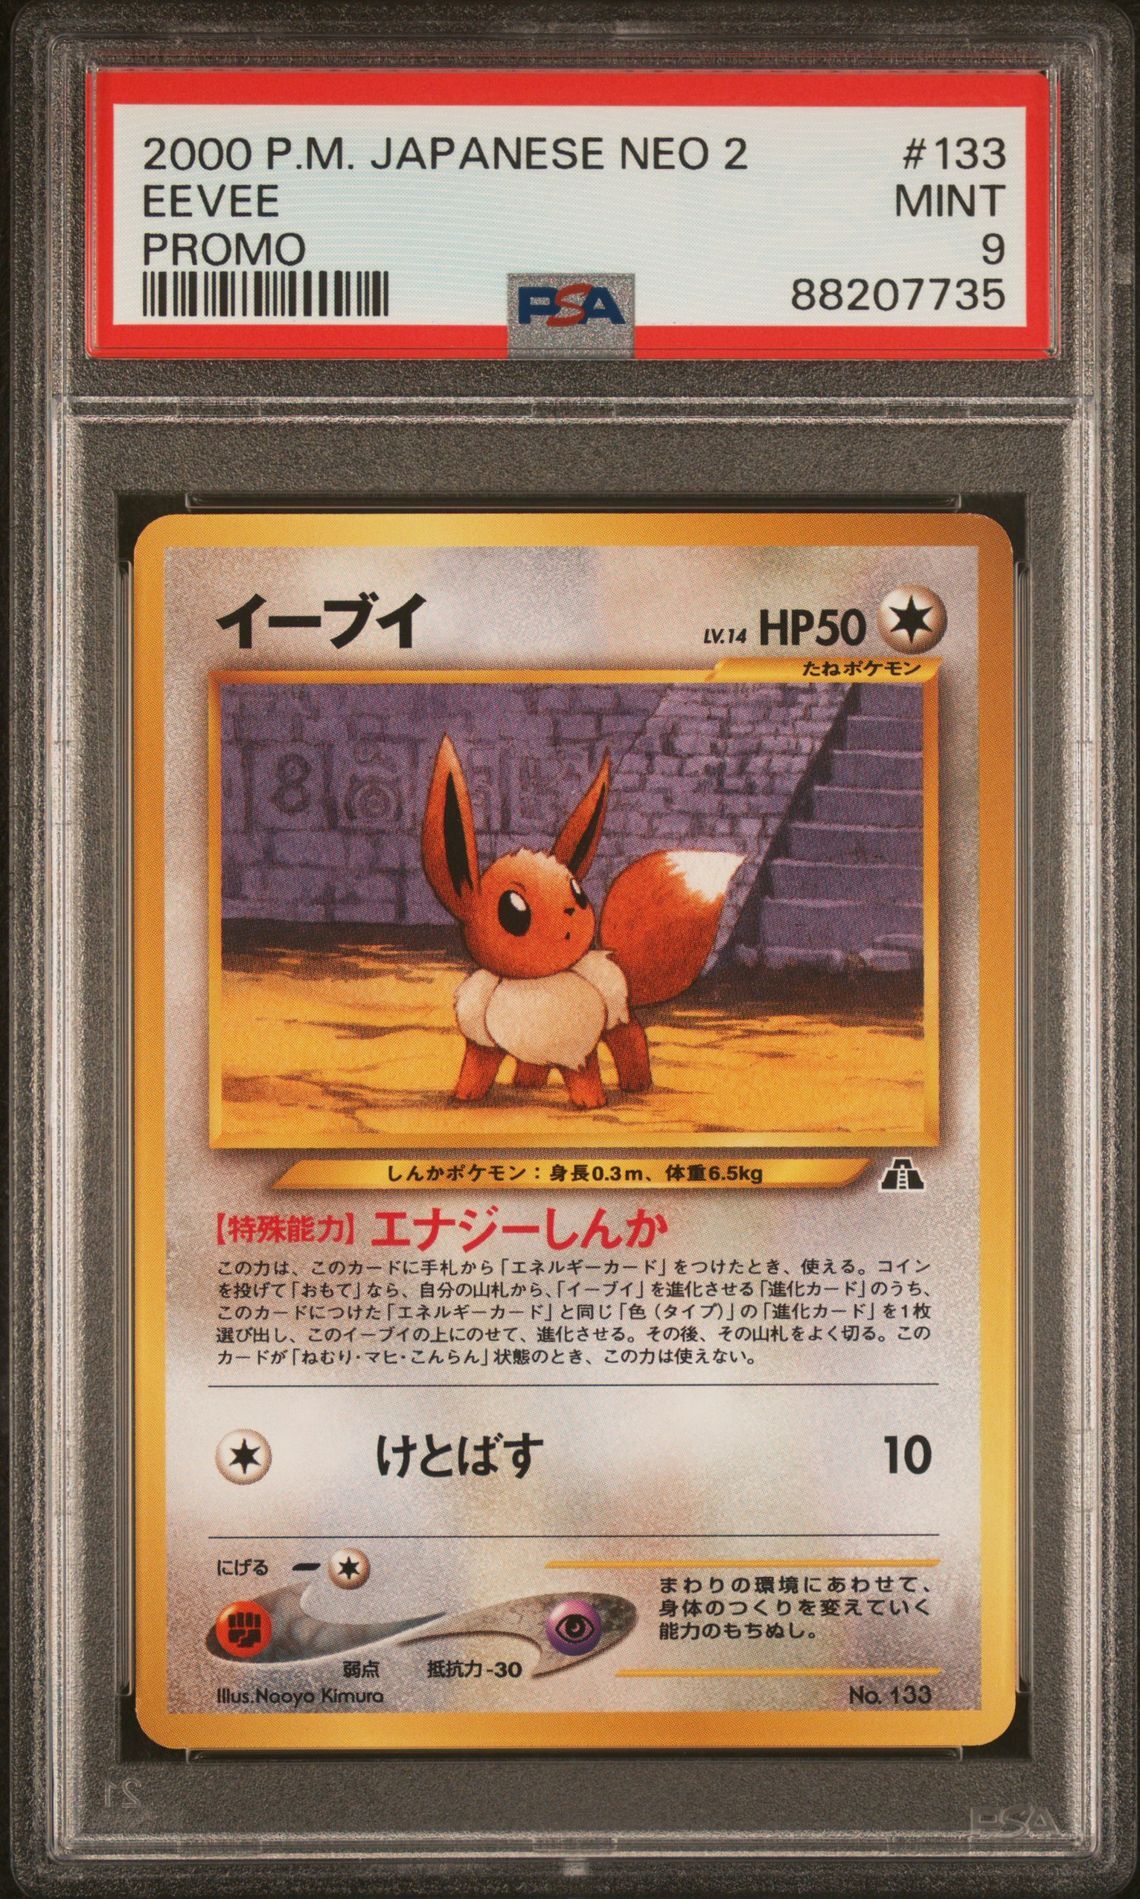 2000 POKEMON JAPANESE NEO 2 PROMO 133 EEVEE PROMO - PSA 9 MINT - Pokémon